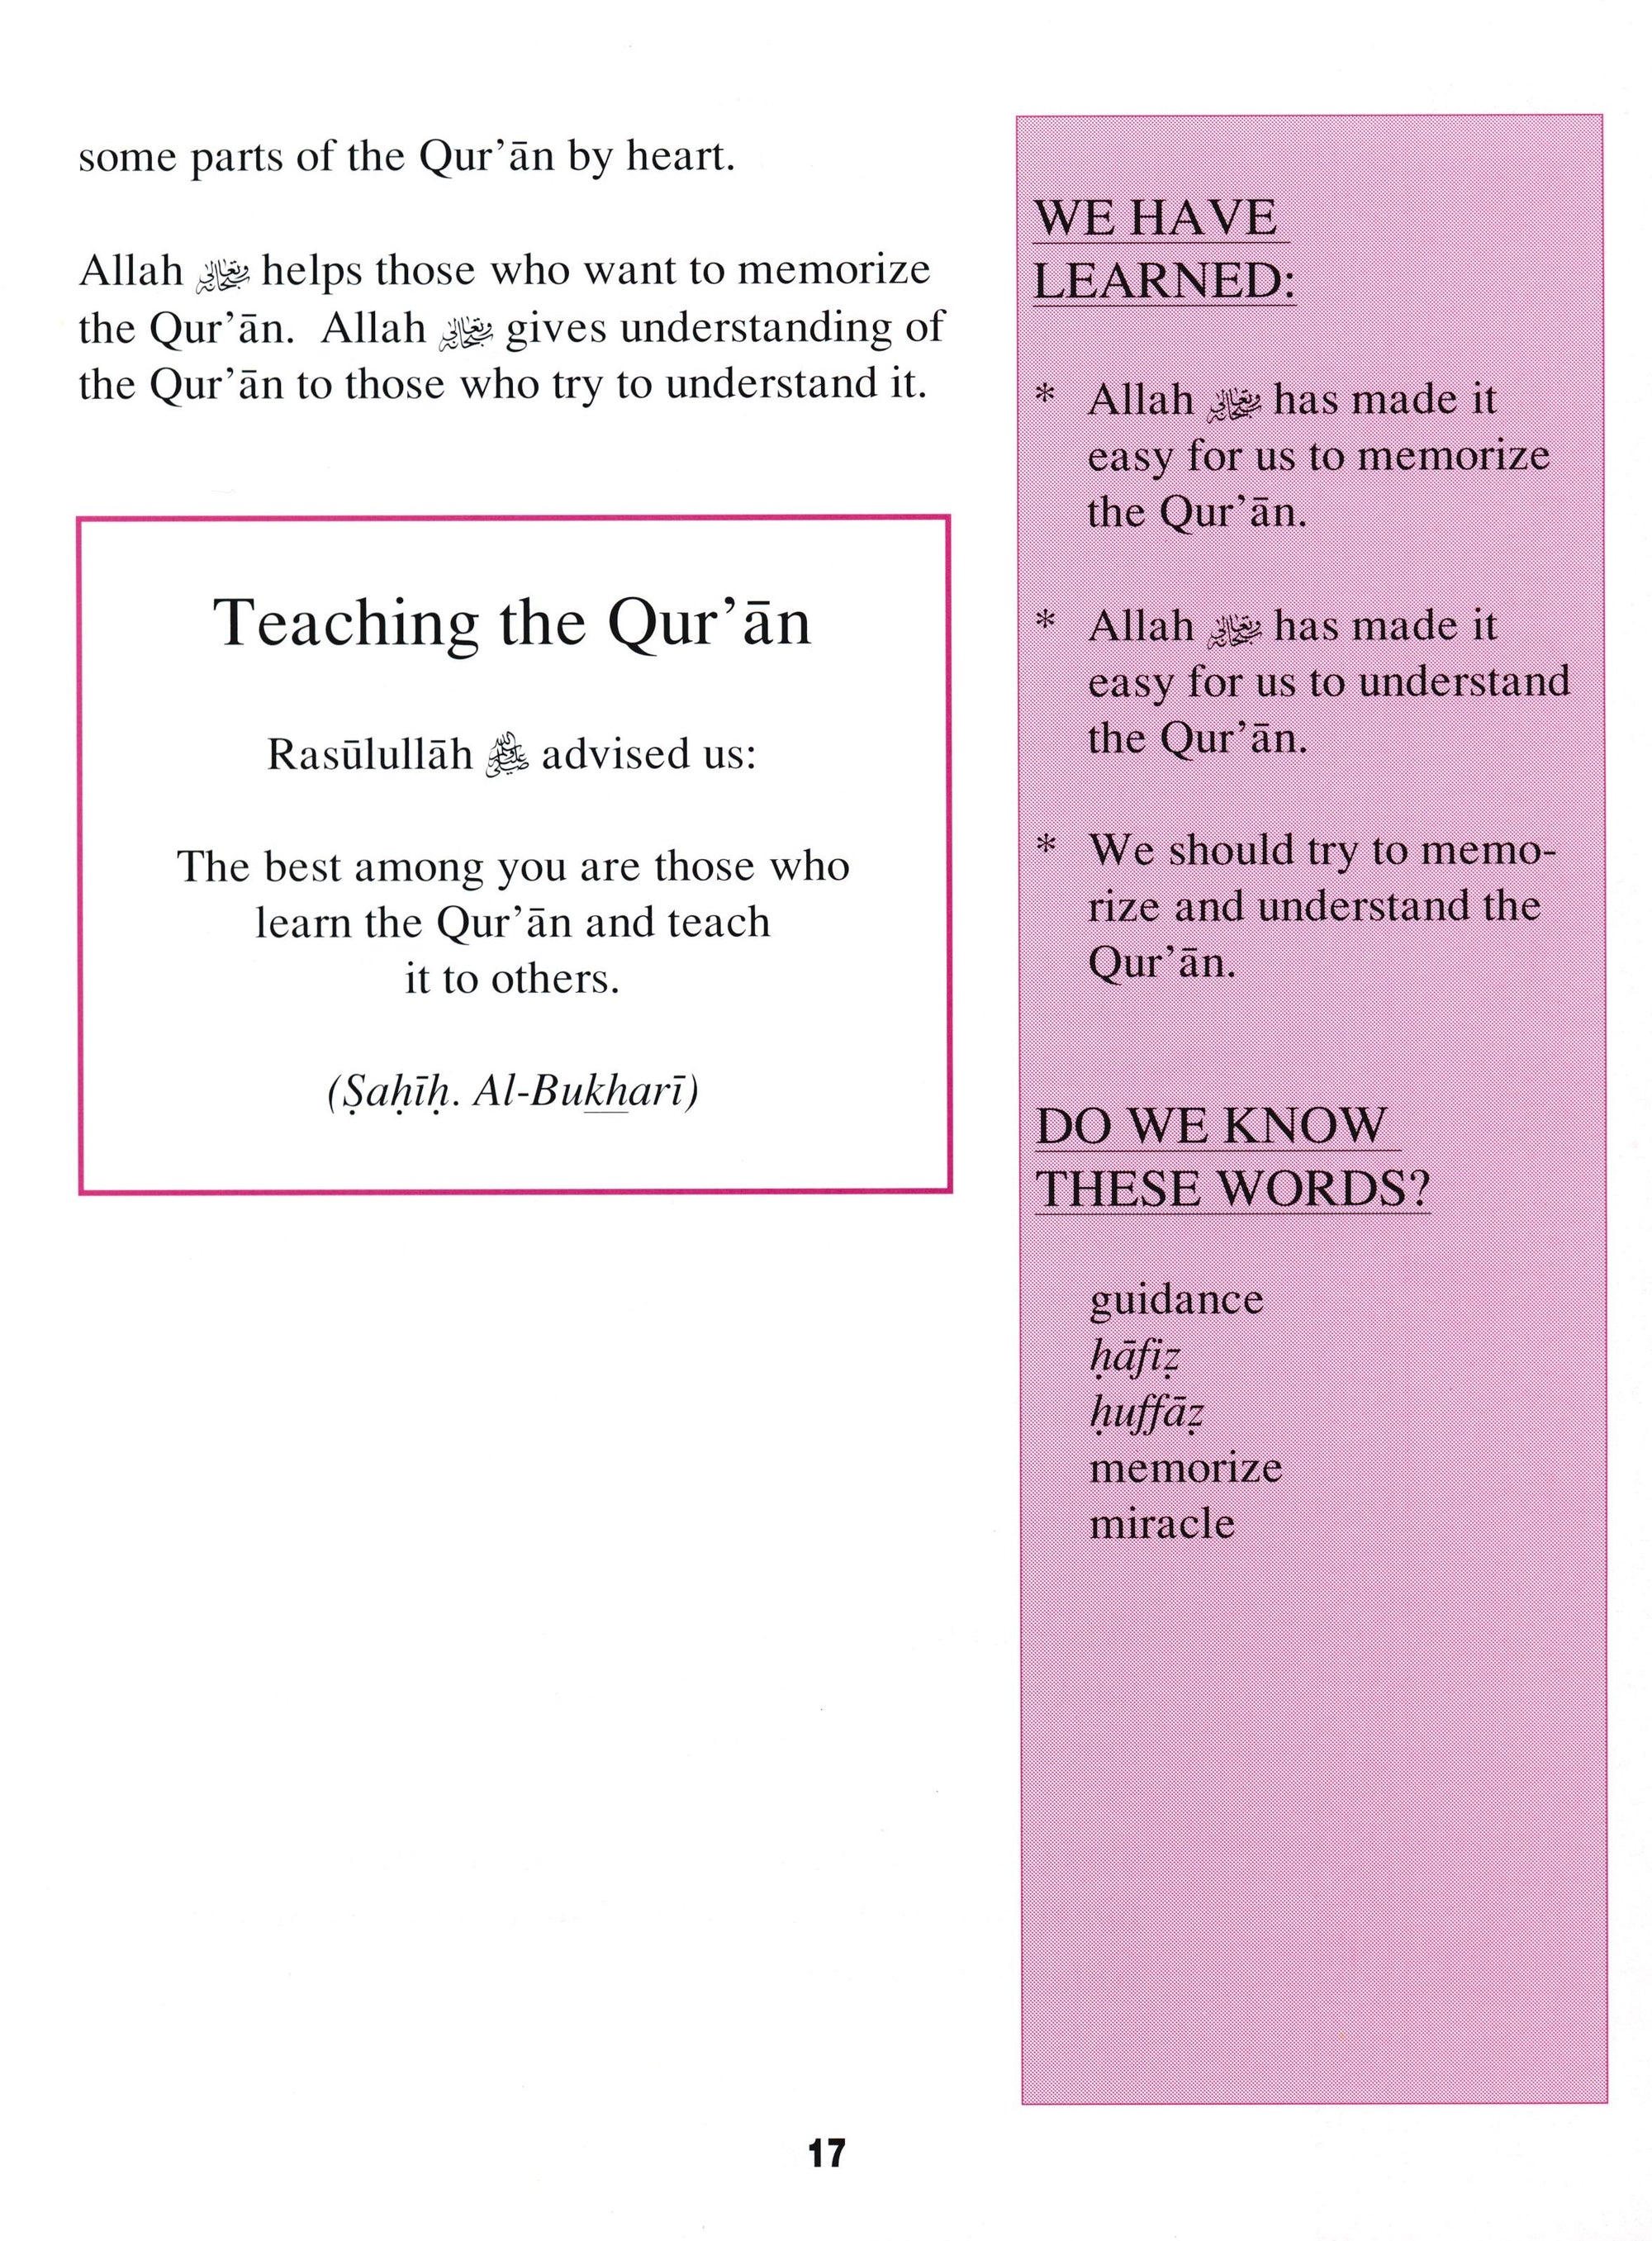 Teachings of the Qur'an Textbook Volume 1